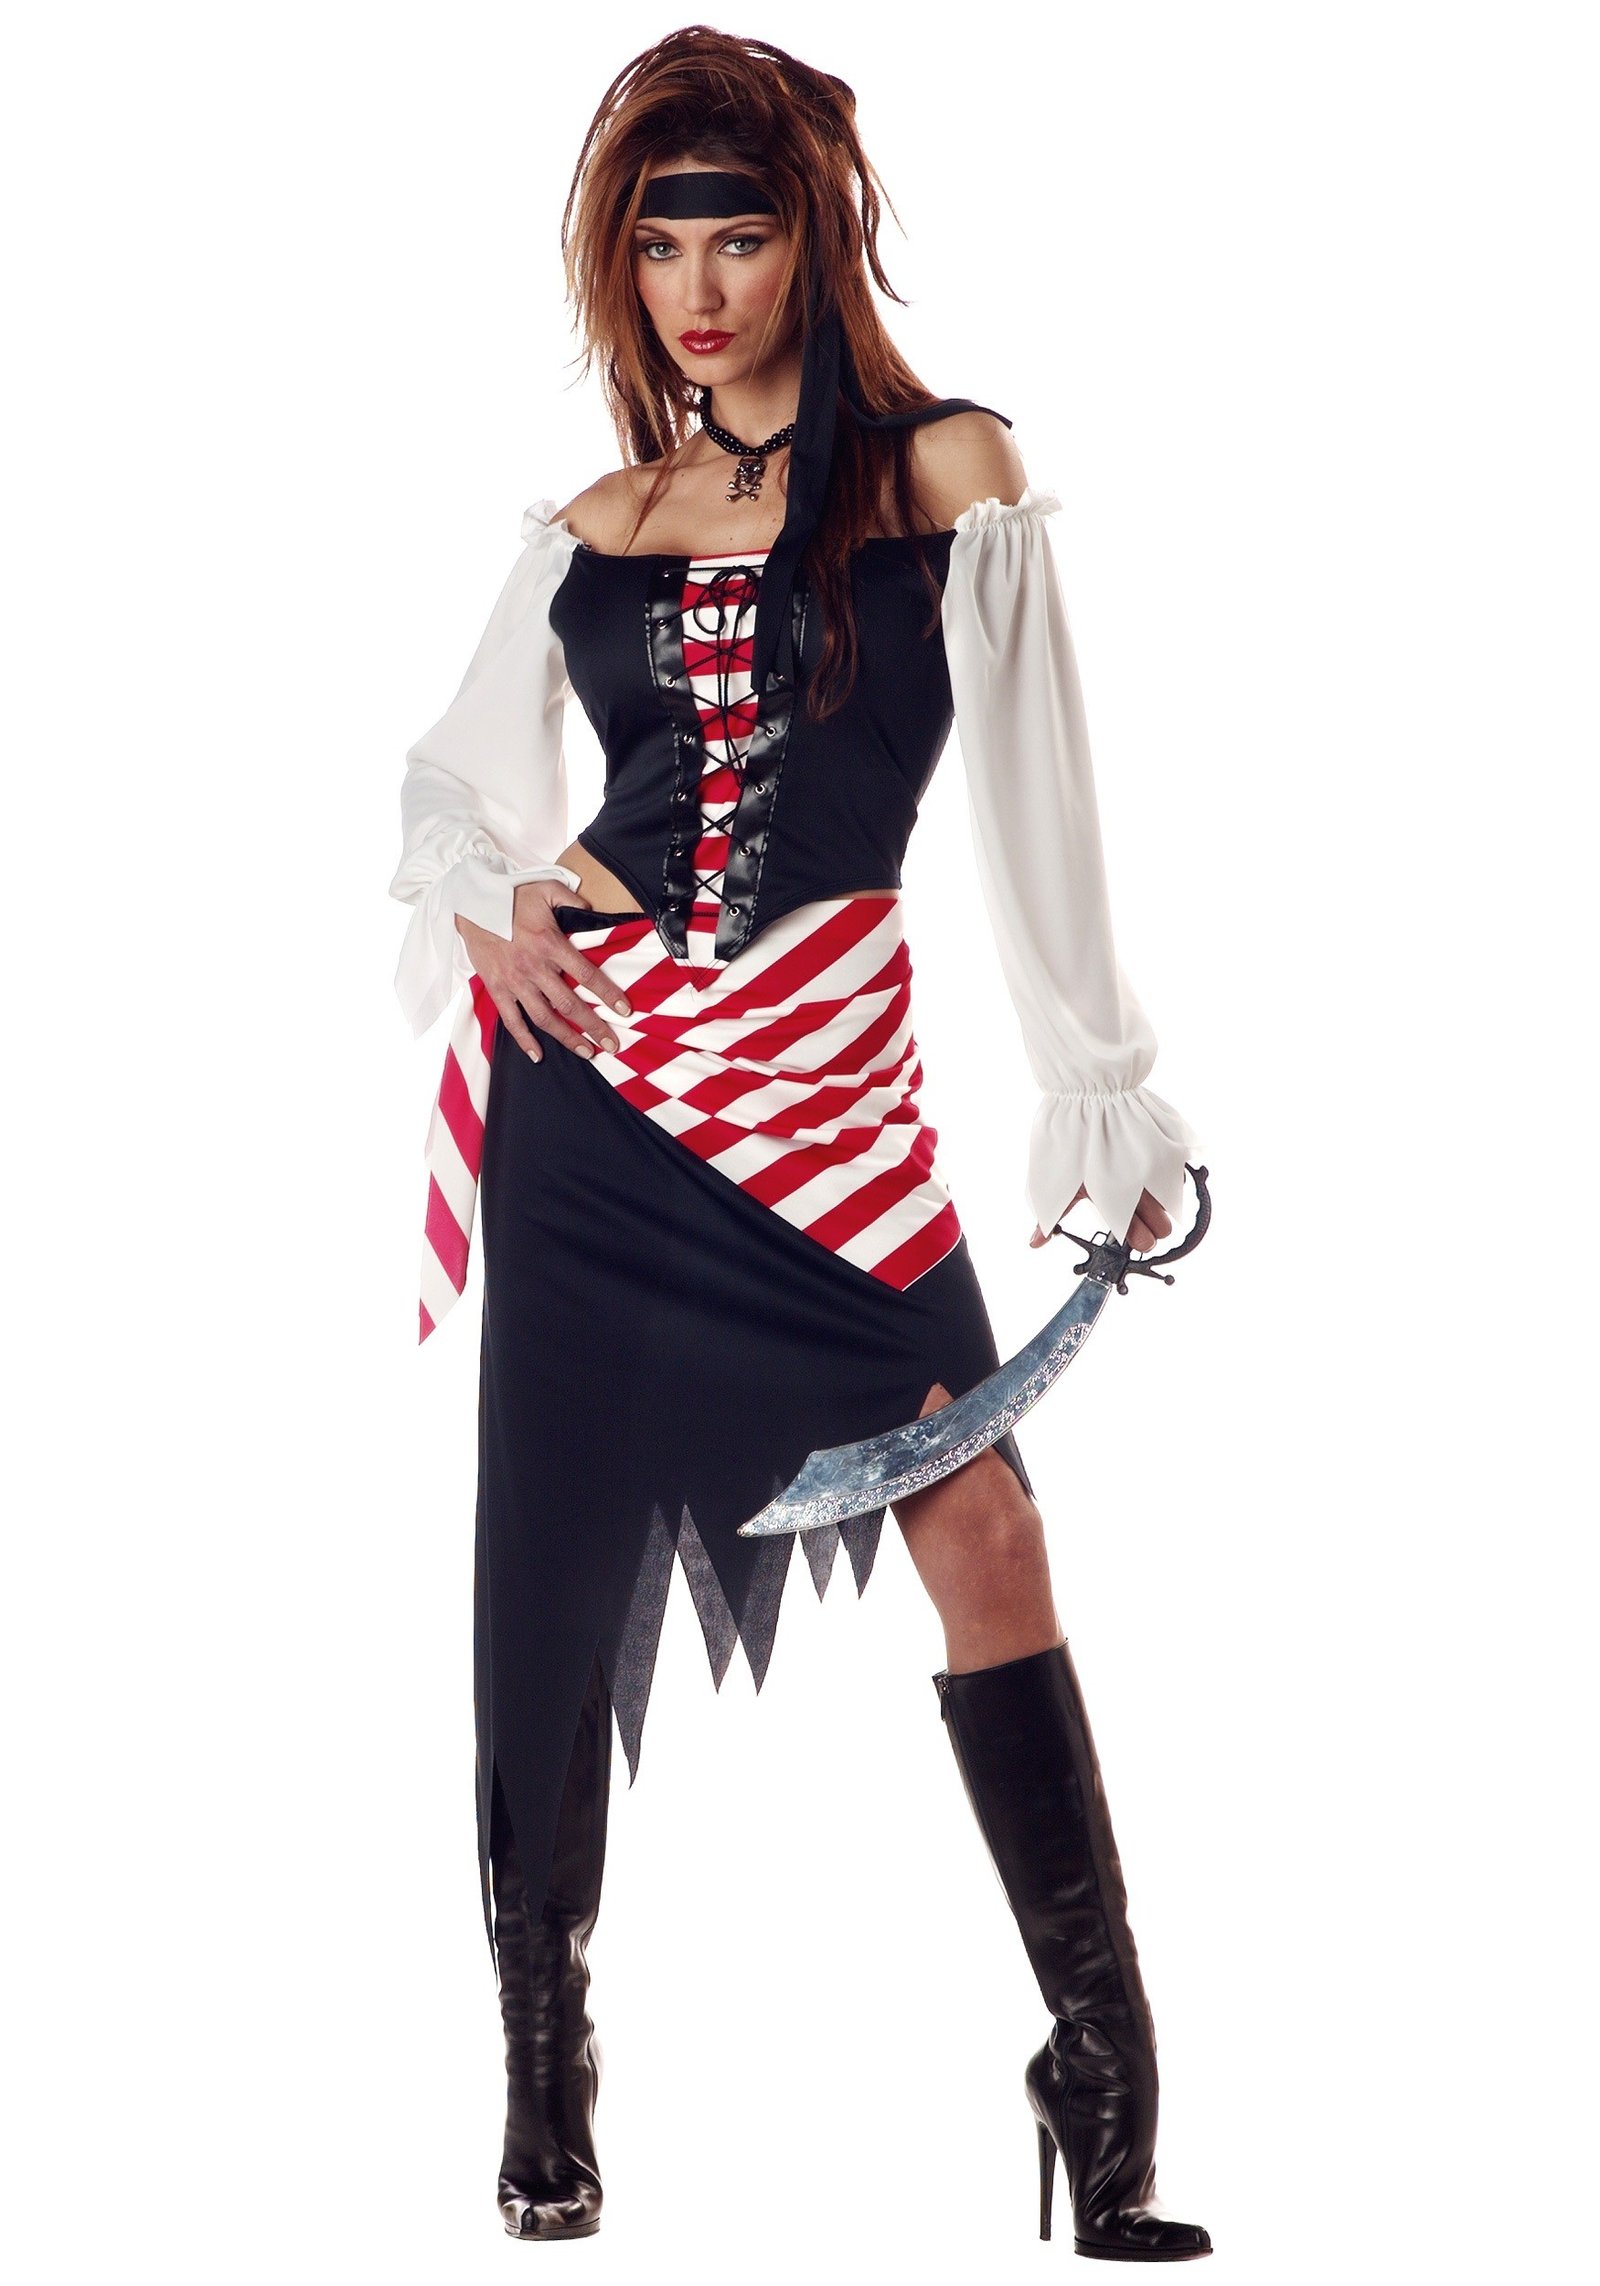 Ruby Pirat Kostyme Voksen Sjørøver Kostyme